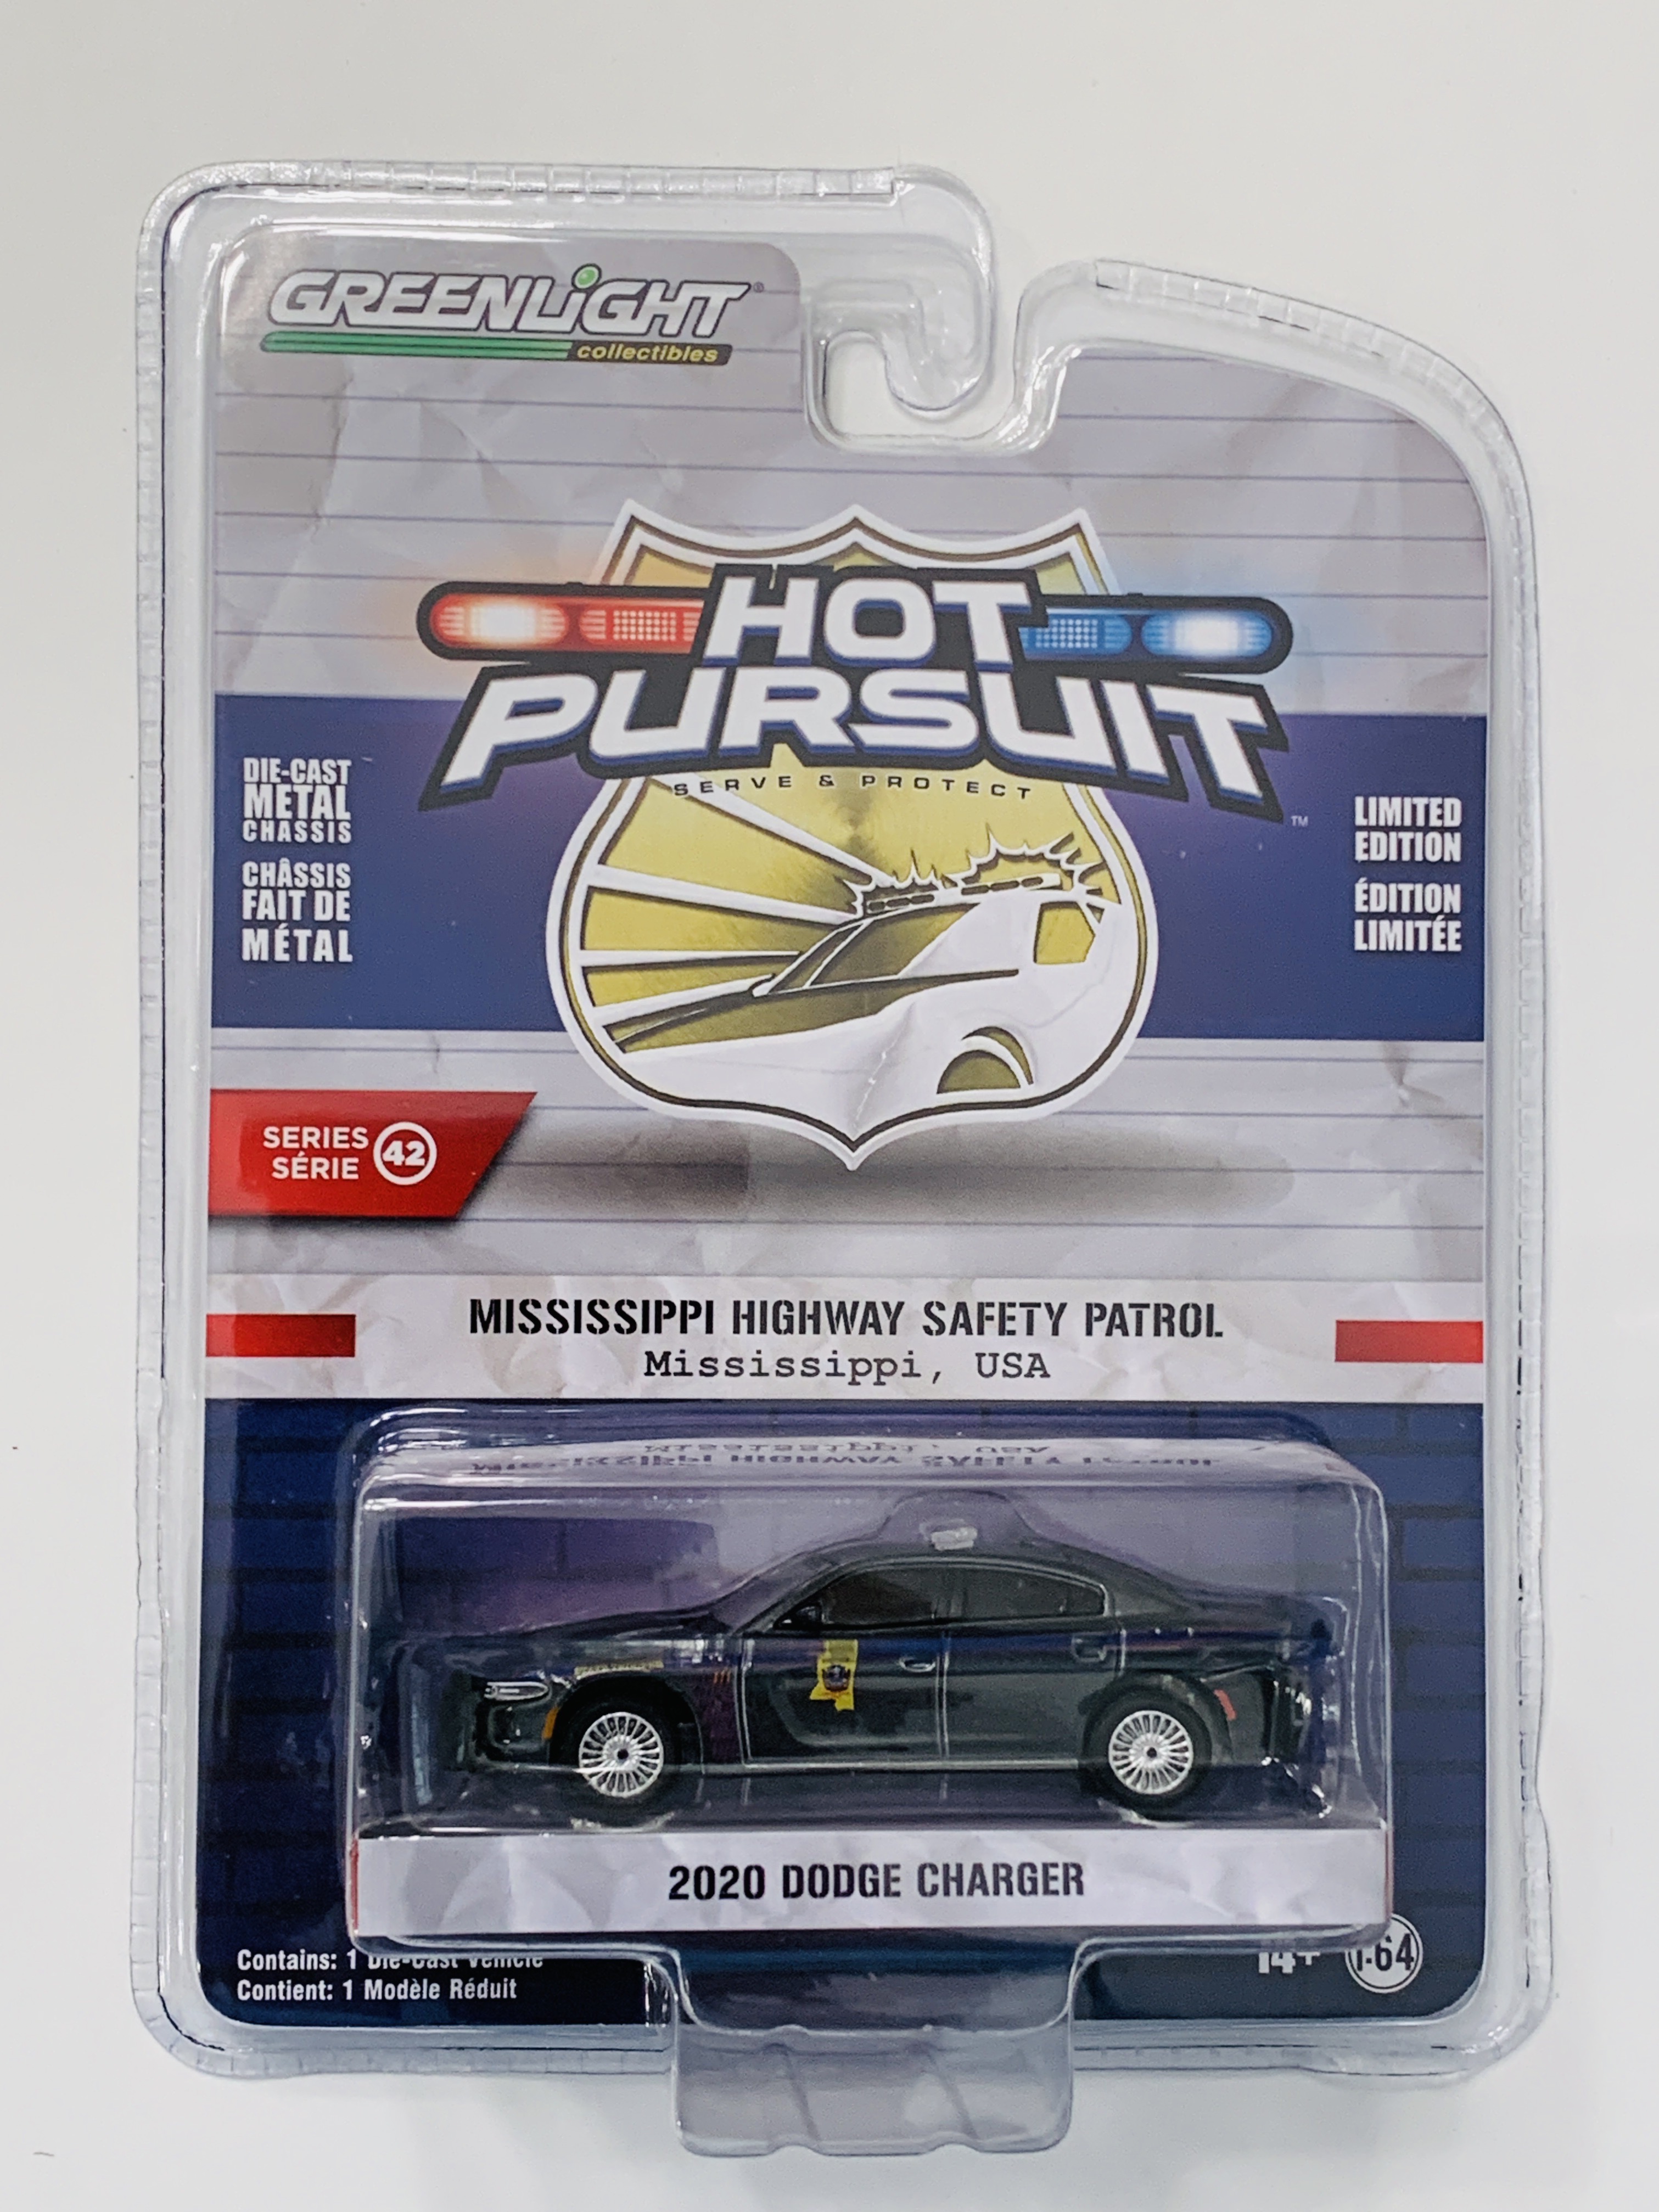 Greenlight Hot Pursuit Mississippi Highway Safety Patrol 2020 Dodge Charger